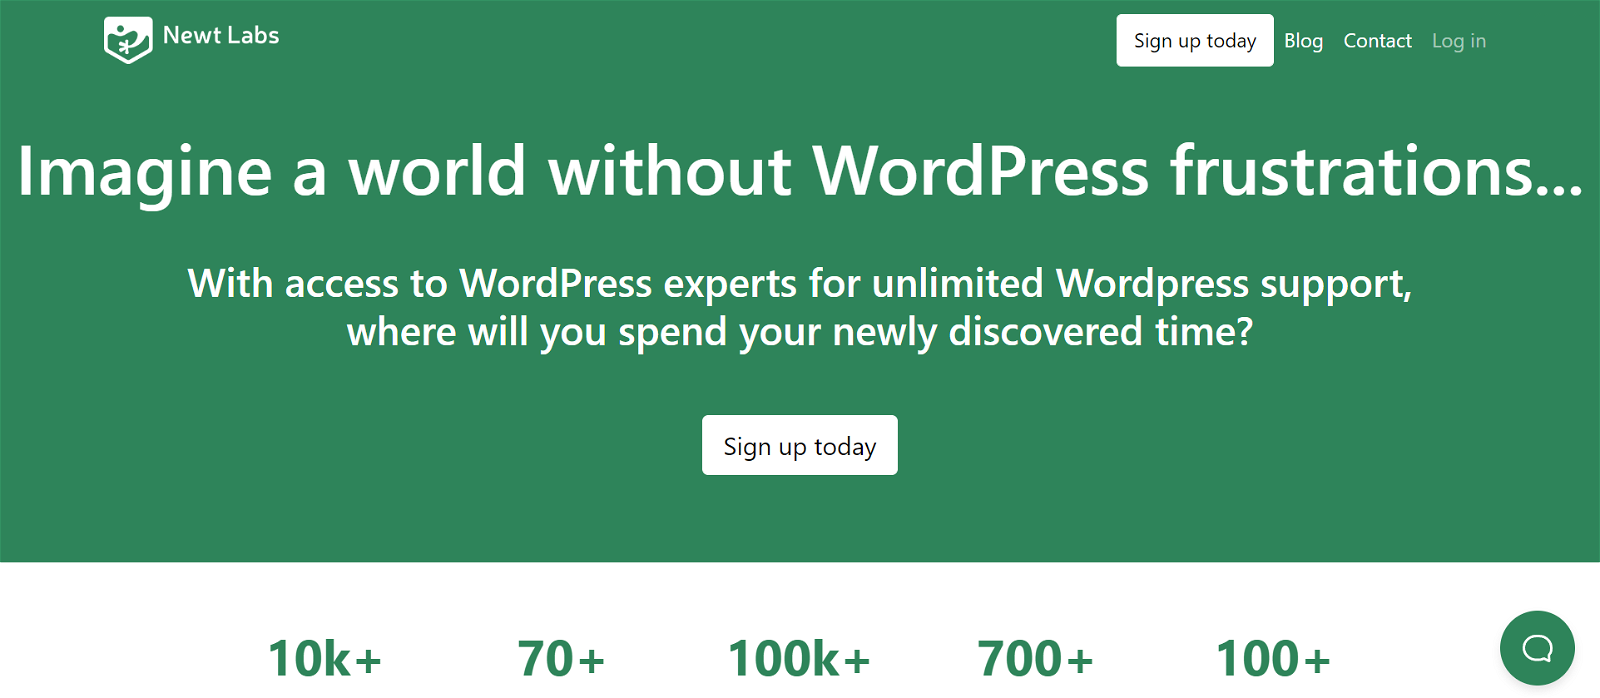 Newt Labs WordPress services